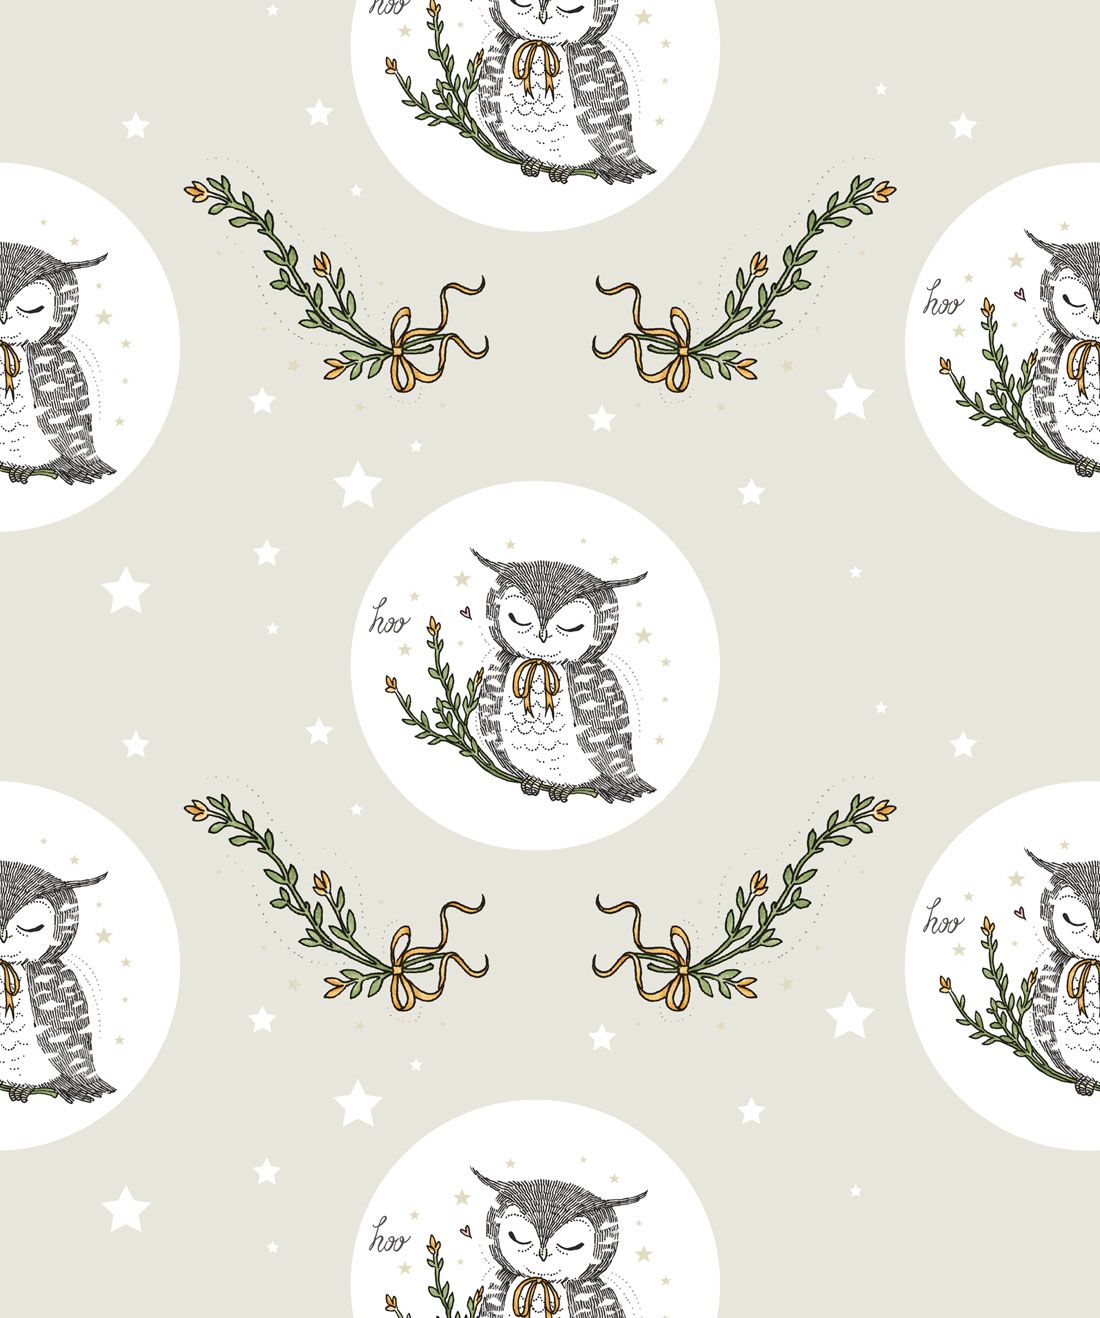 Owl Moon Wallpaper